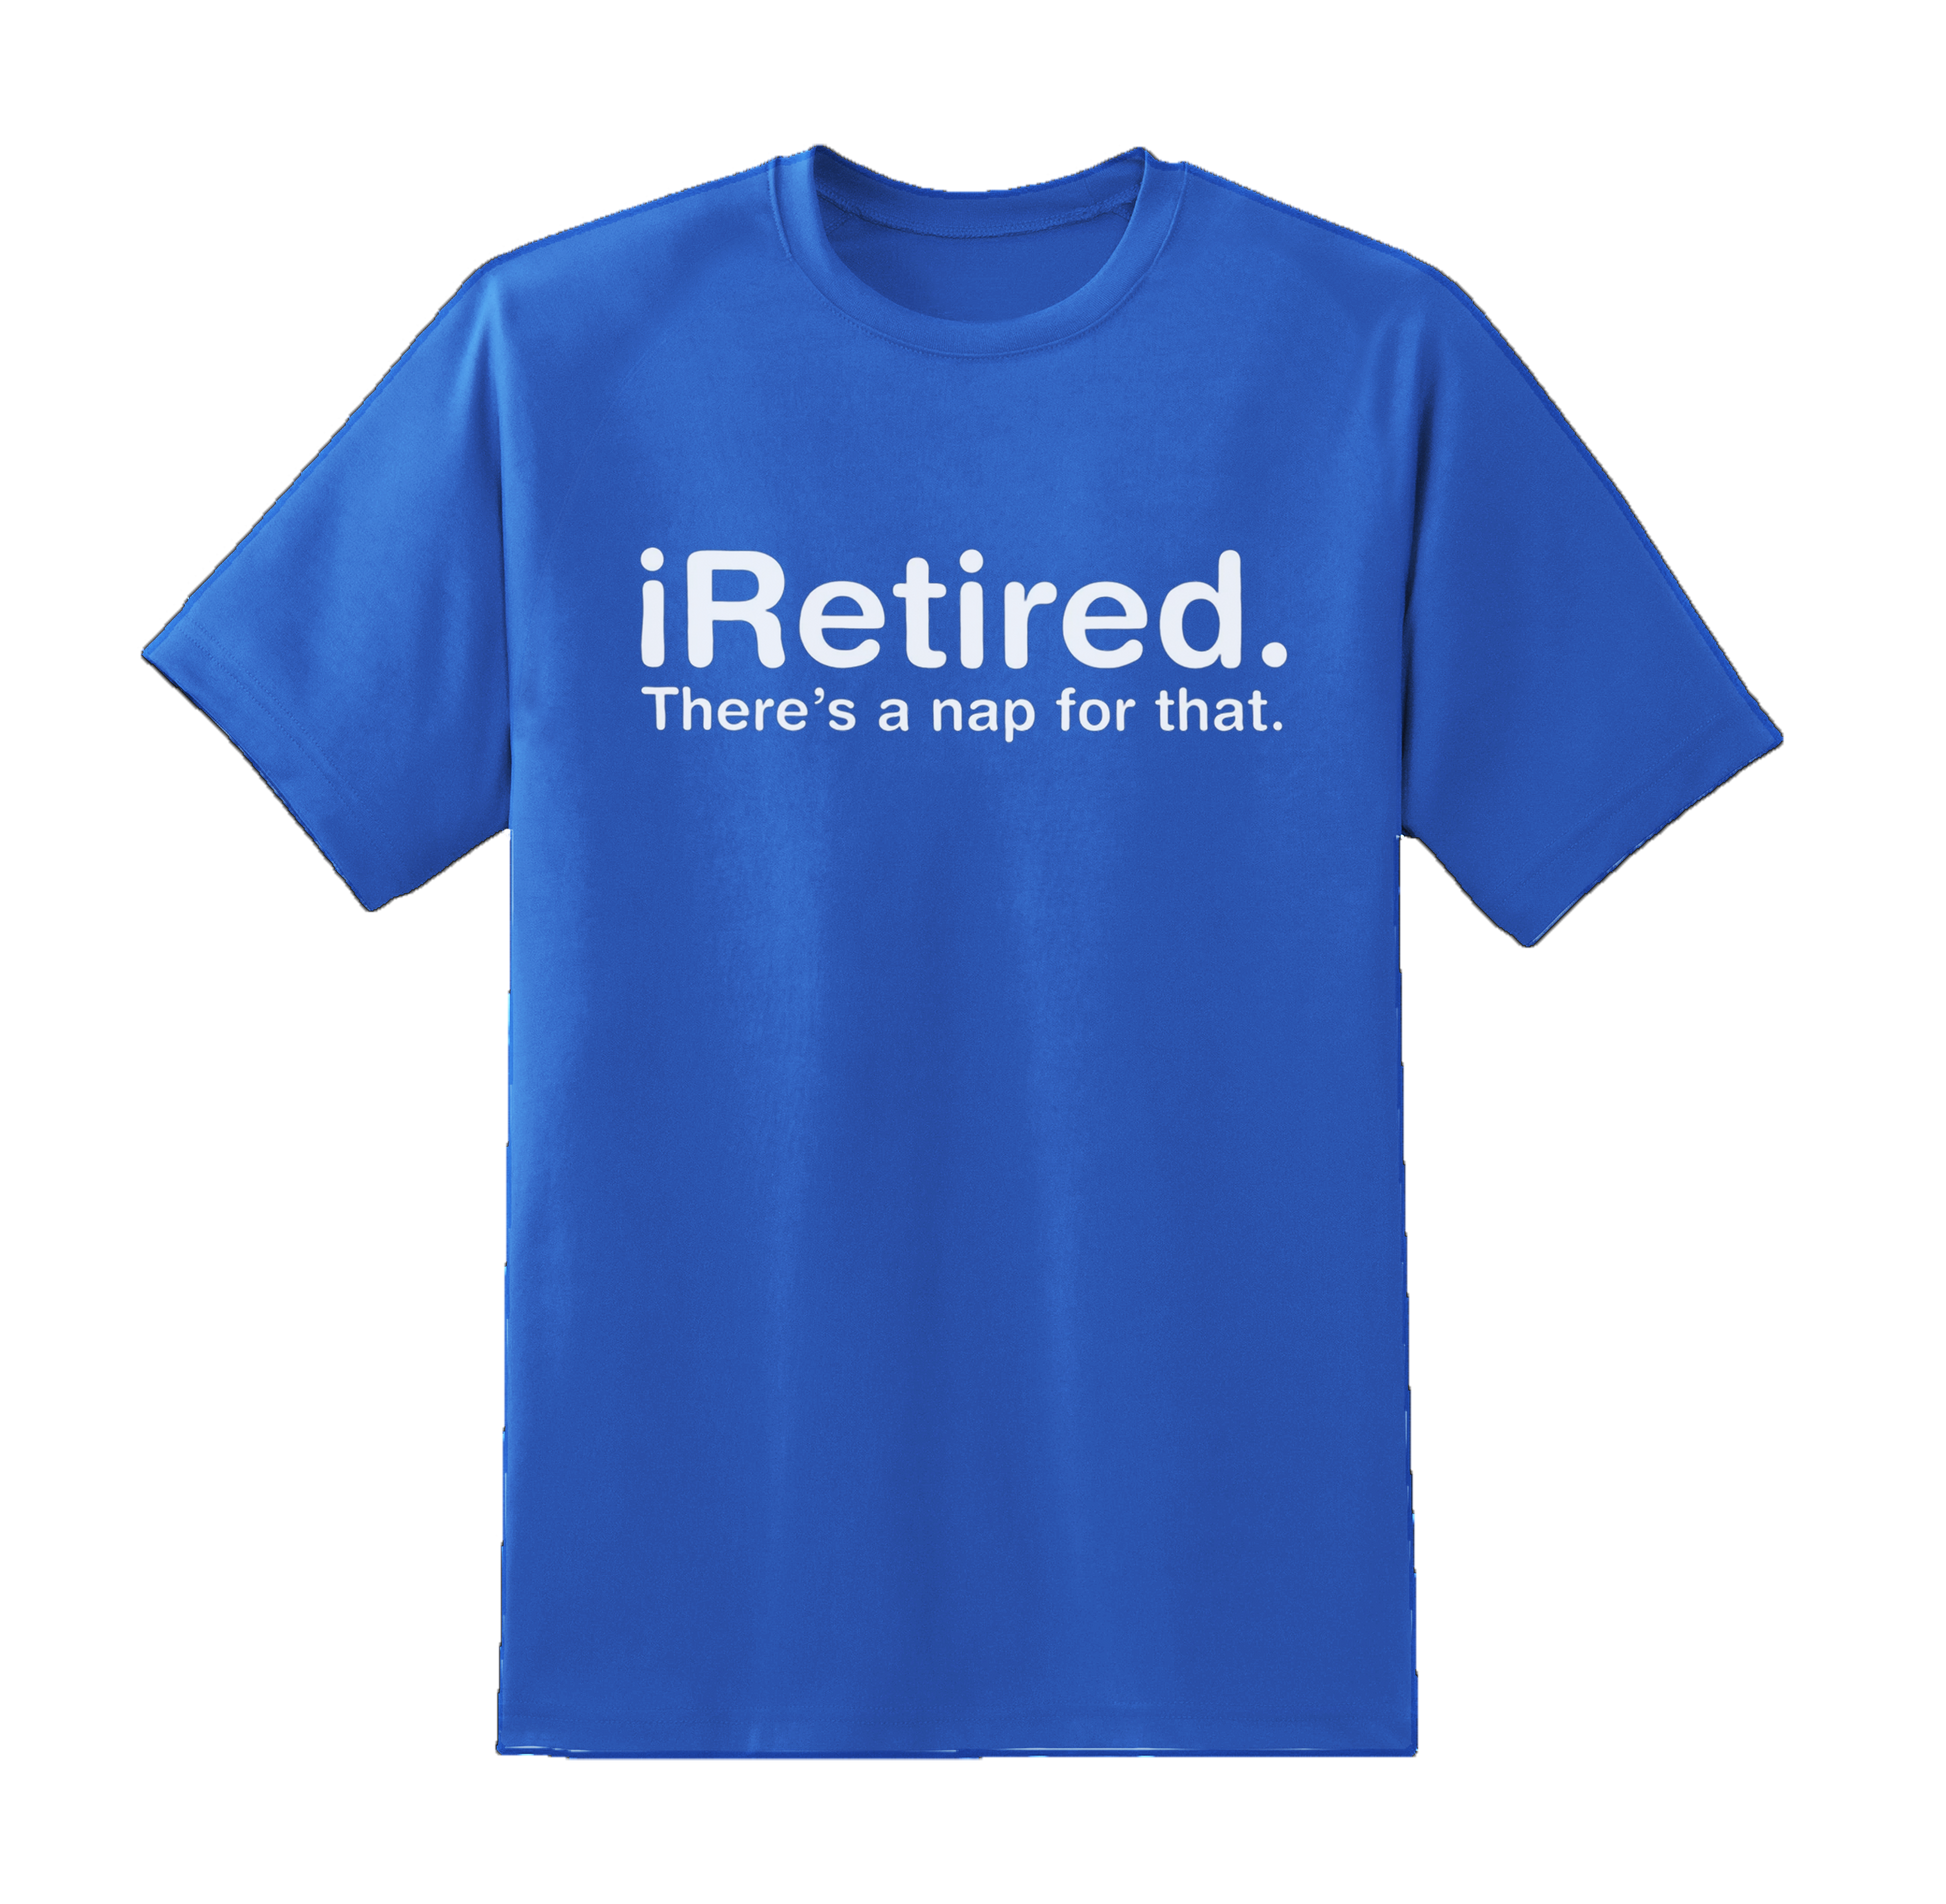 "I Retired" Tee